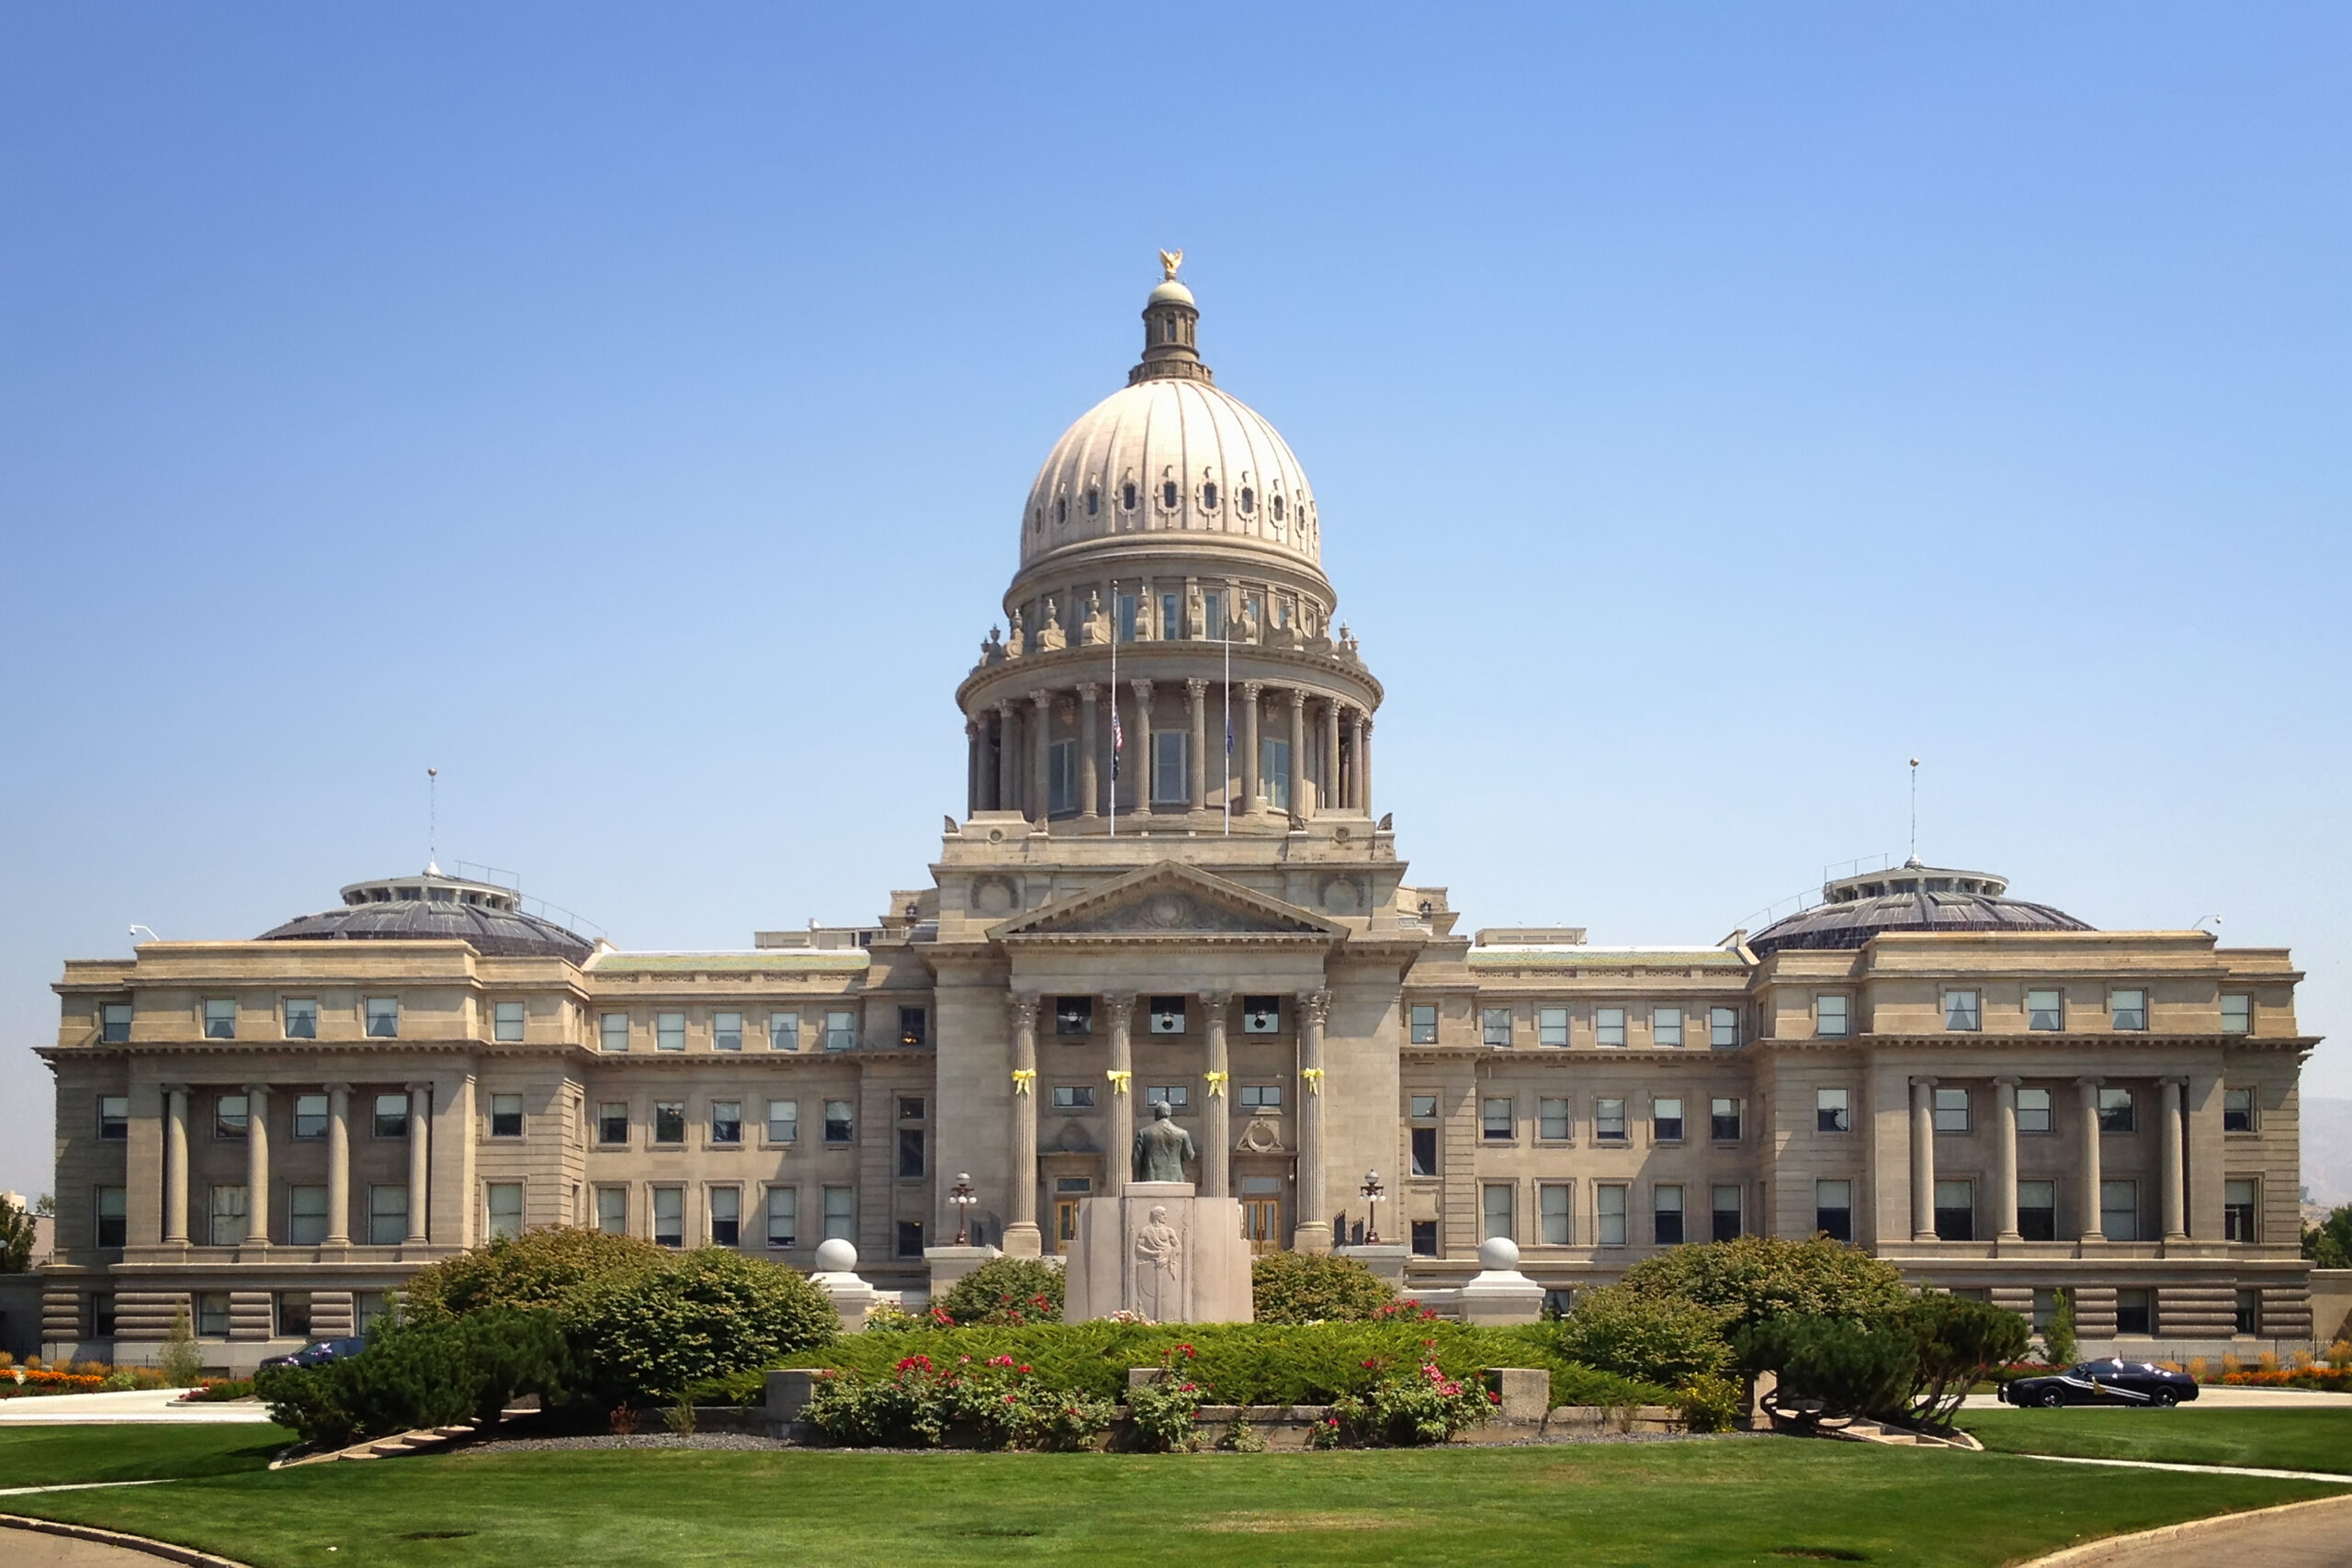 Idaho_Capitol_Building-scaled